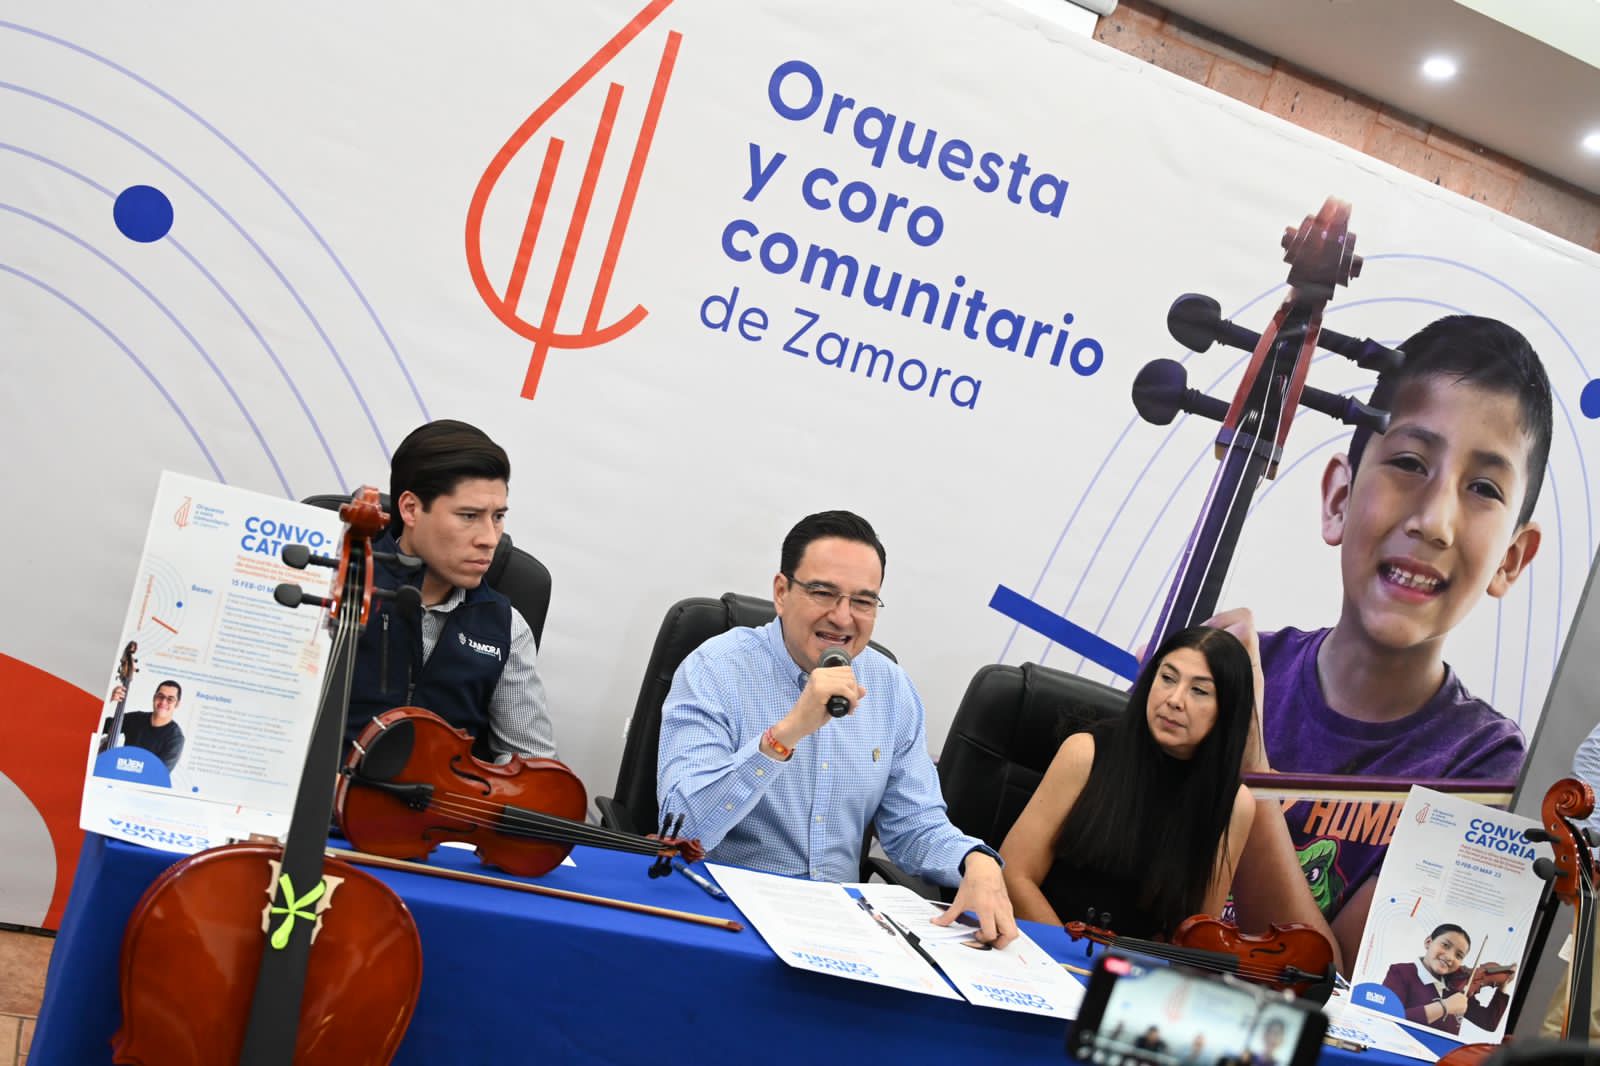 Lanzan convocatoria para integrar orquesta y coro comunitario de Zamora